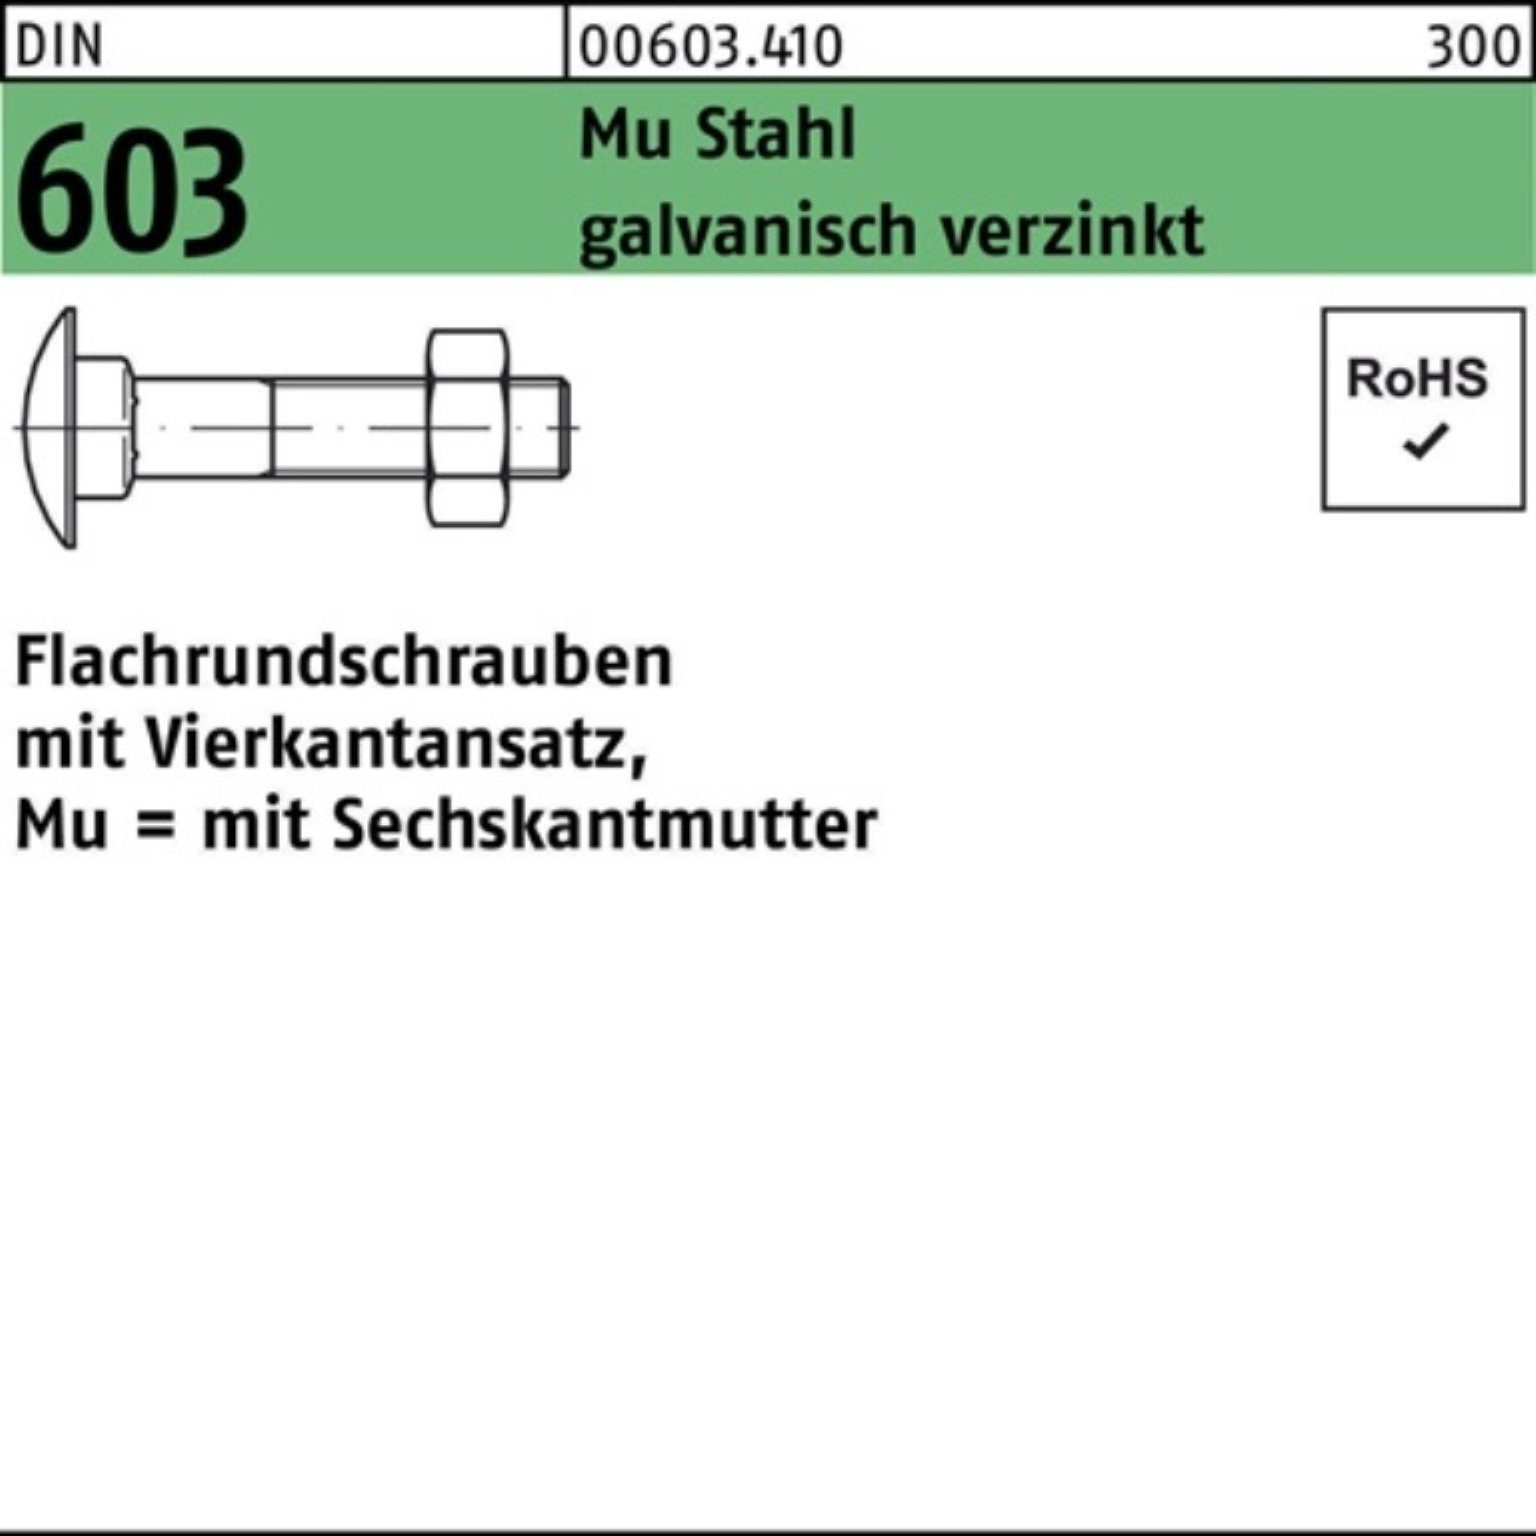 Schraube Vierkantansatz/6-ktmutter DIN Pack Reyher Flachrundschraube 100er 603 M16x55